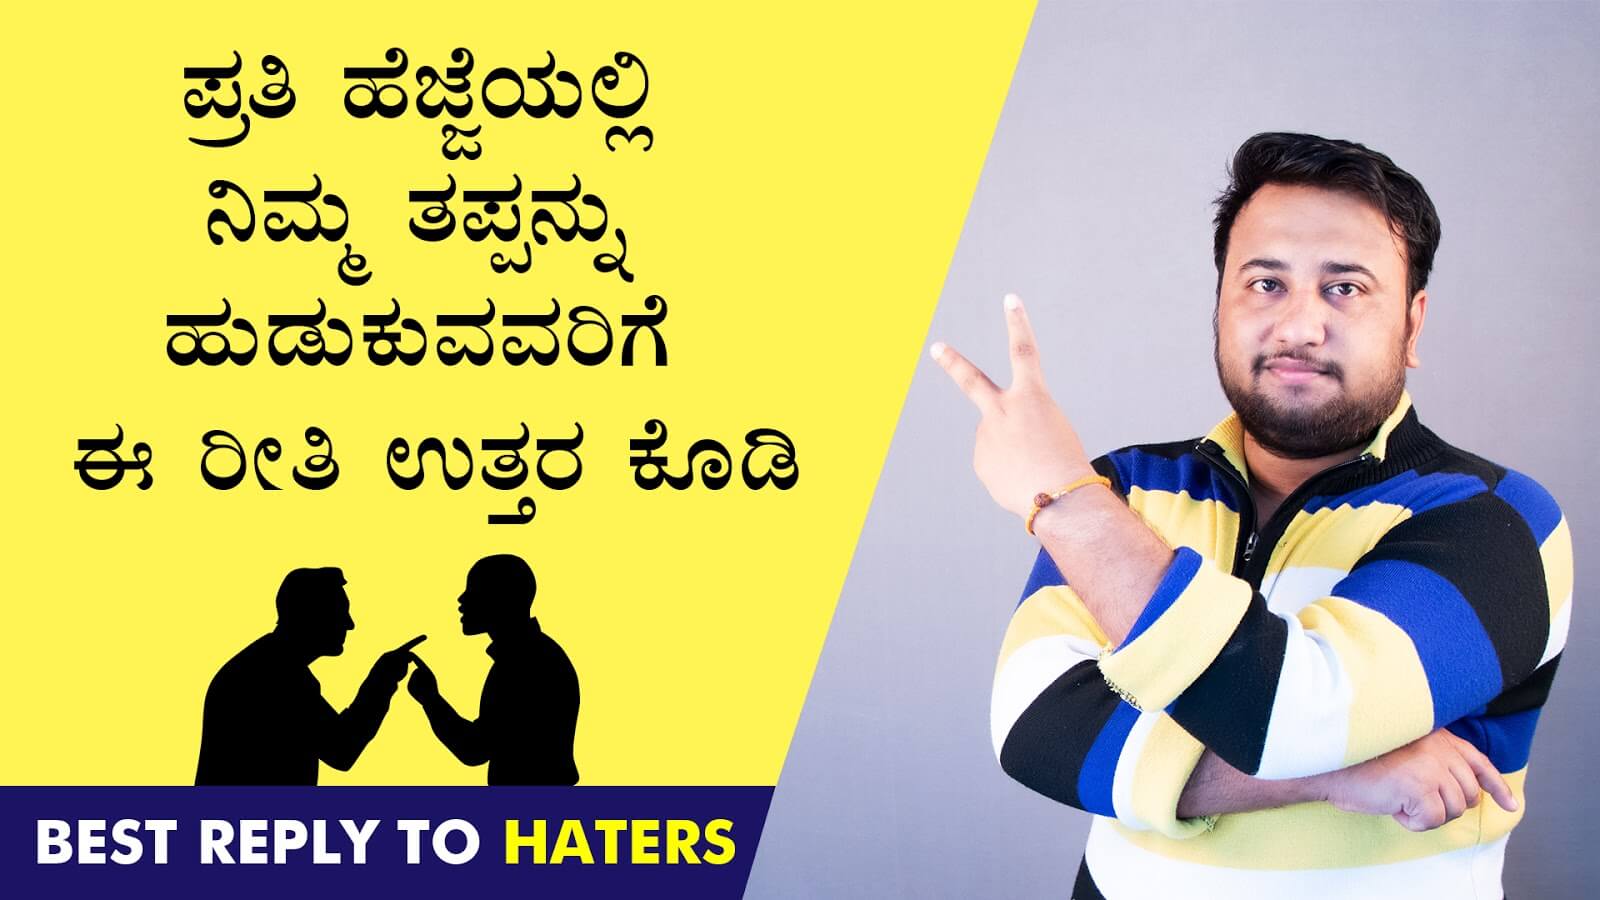 You are currently viewing ಪ್ರತಿ ಹೆಜ್ಜೆಯಲ್ಲಿ ನಿಮ್ಮ ತಪ್ಪನ್ನು ಹುಡುಕುವವರಿಗೆ ಈ ರೀತಿ ಉತ್ತರ ಕೊಡಿ : Best Reply to Haters in Kannada